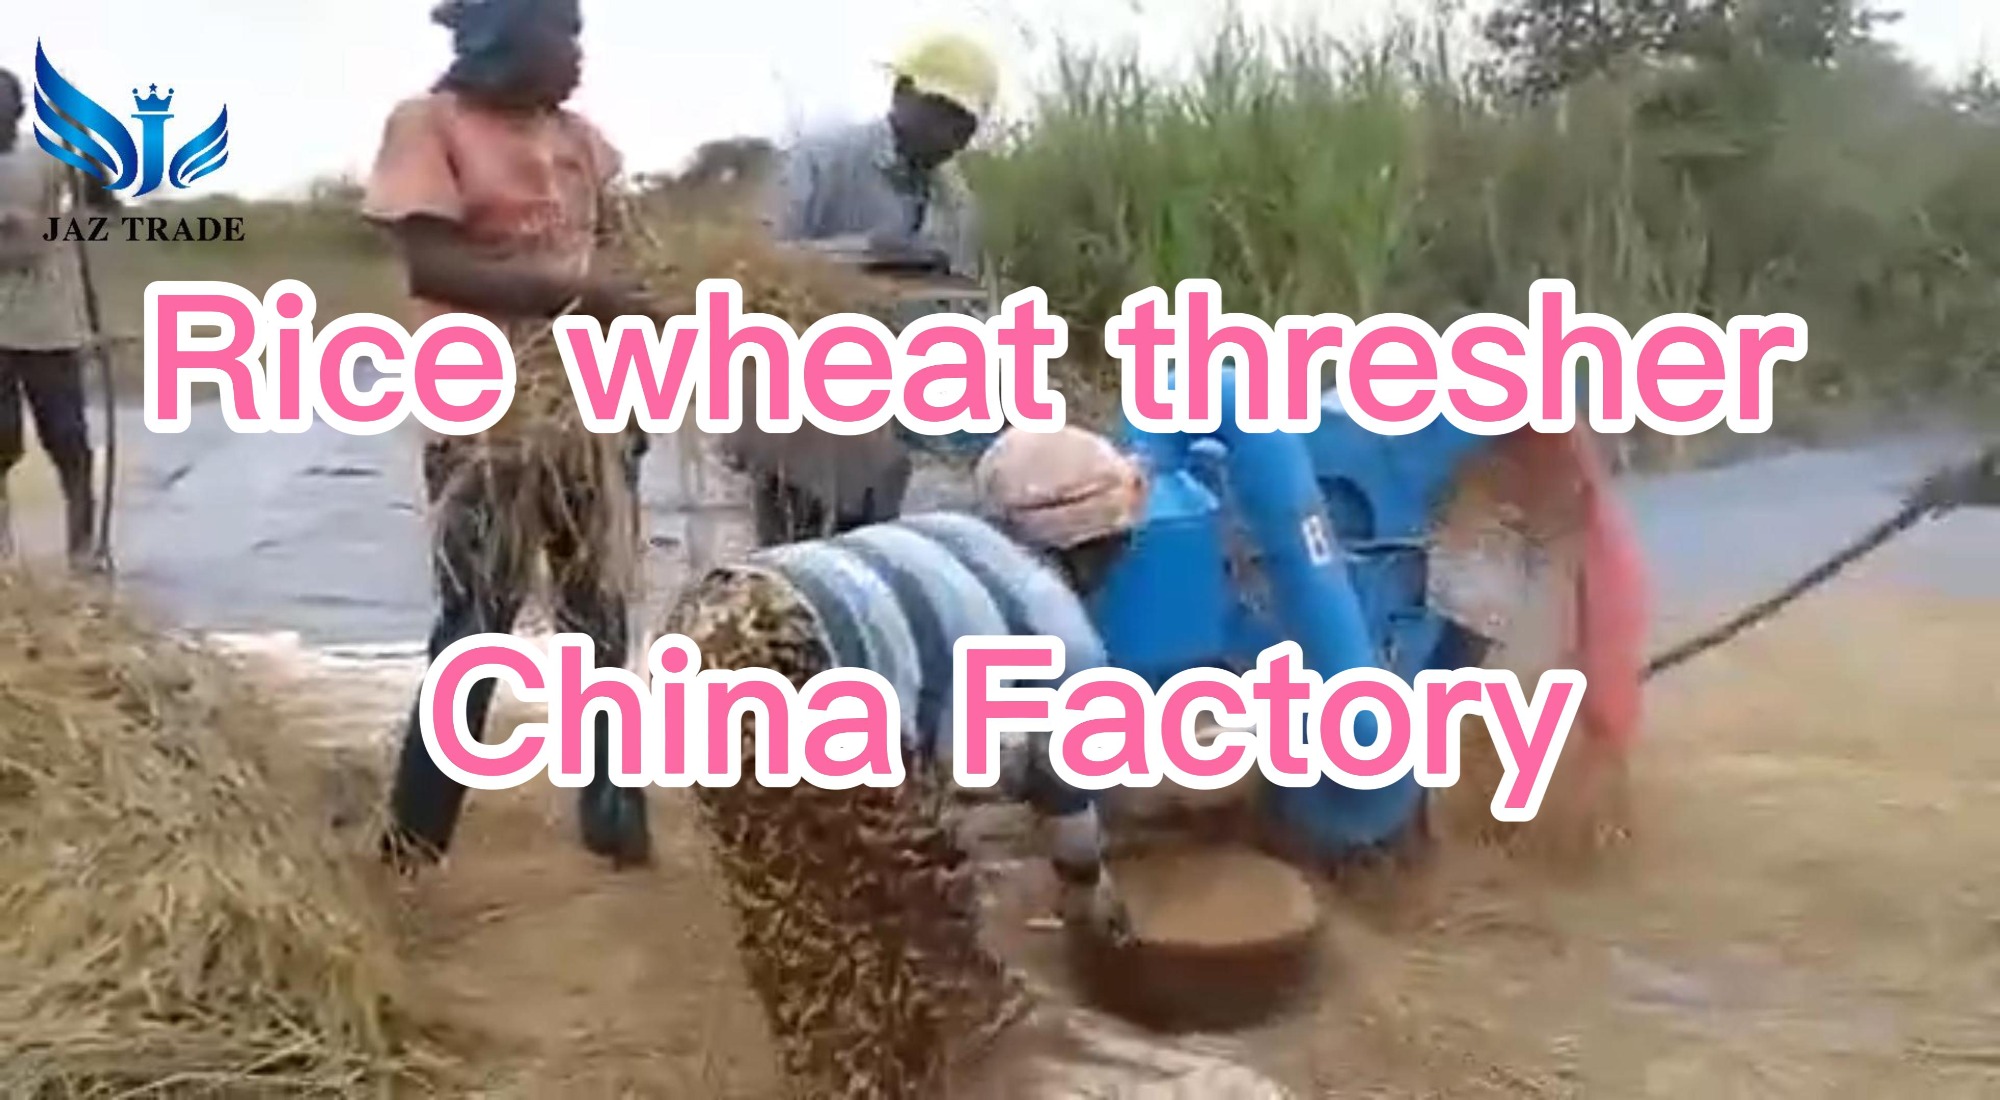 Farmer Best tool| Wheat thresher | Rice paddy thresher |How to thresh Wheat and Rice /Rice Threshing